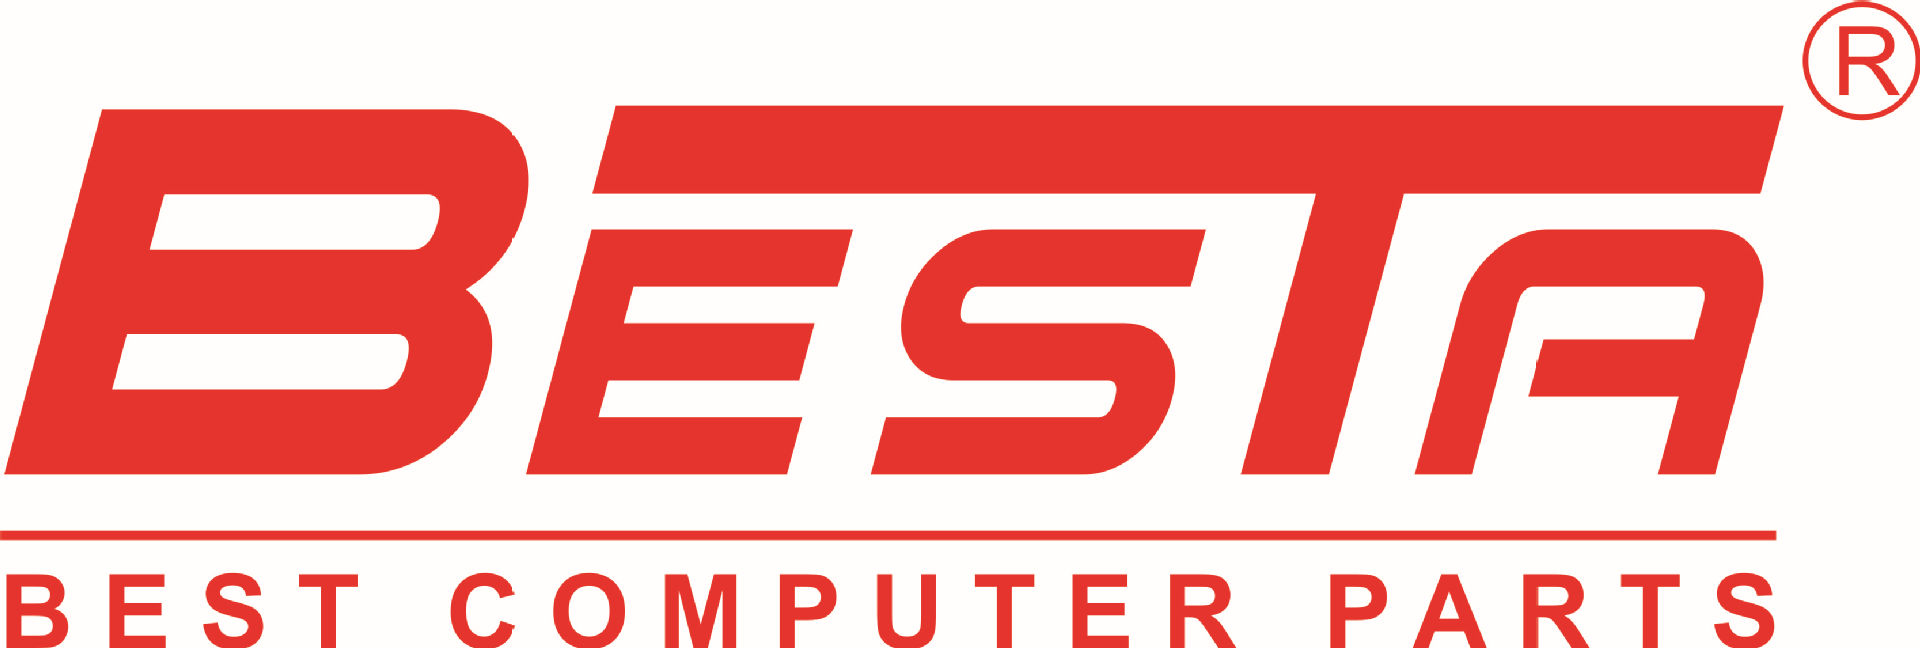 BESTA-logo